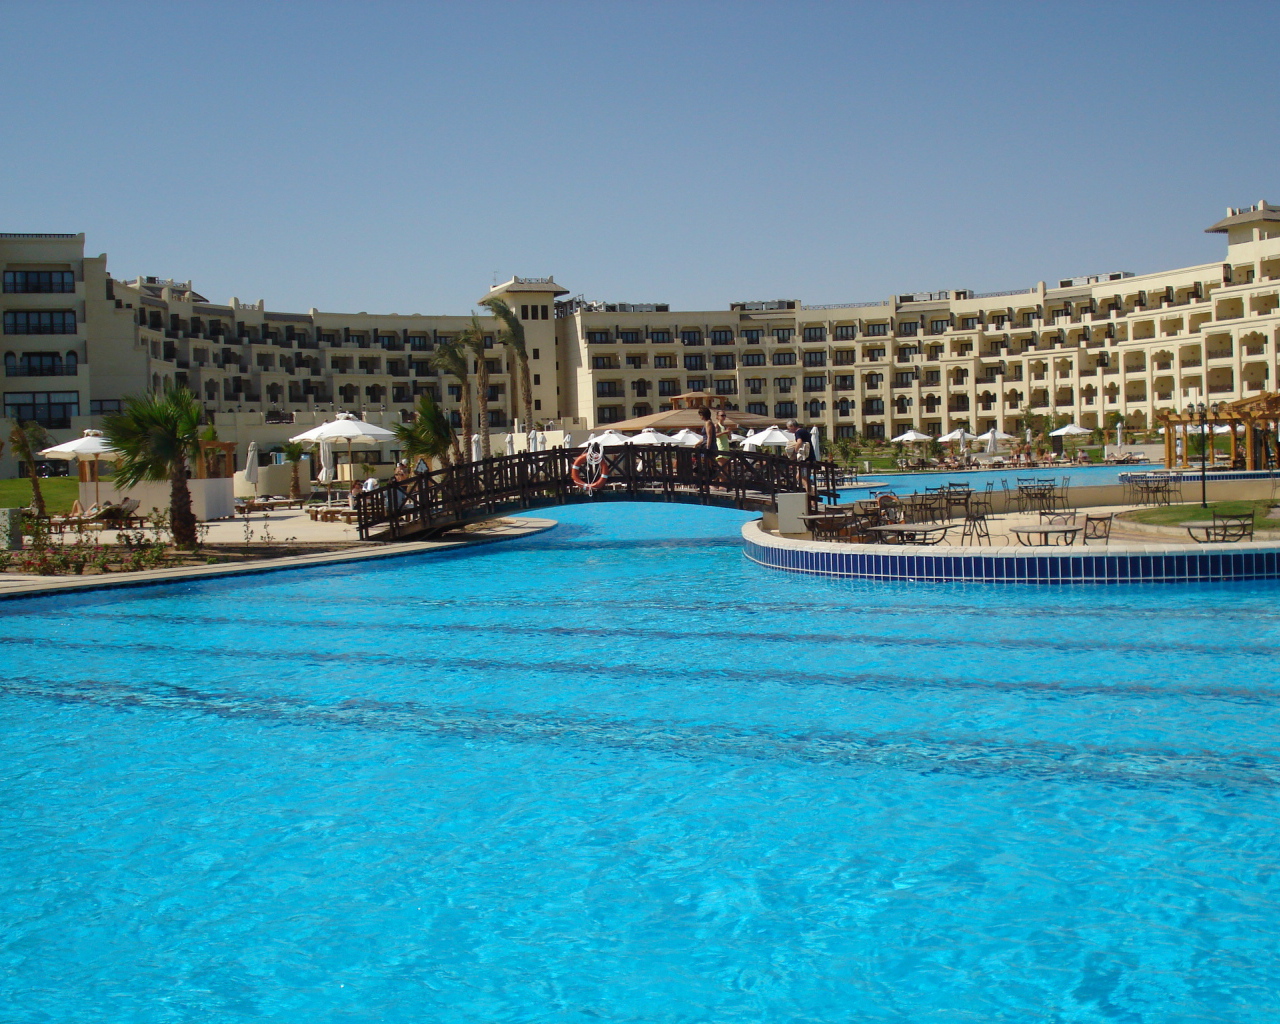 Бассейн в отеле на курорте Хургада, Египет